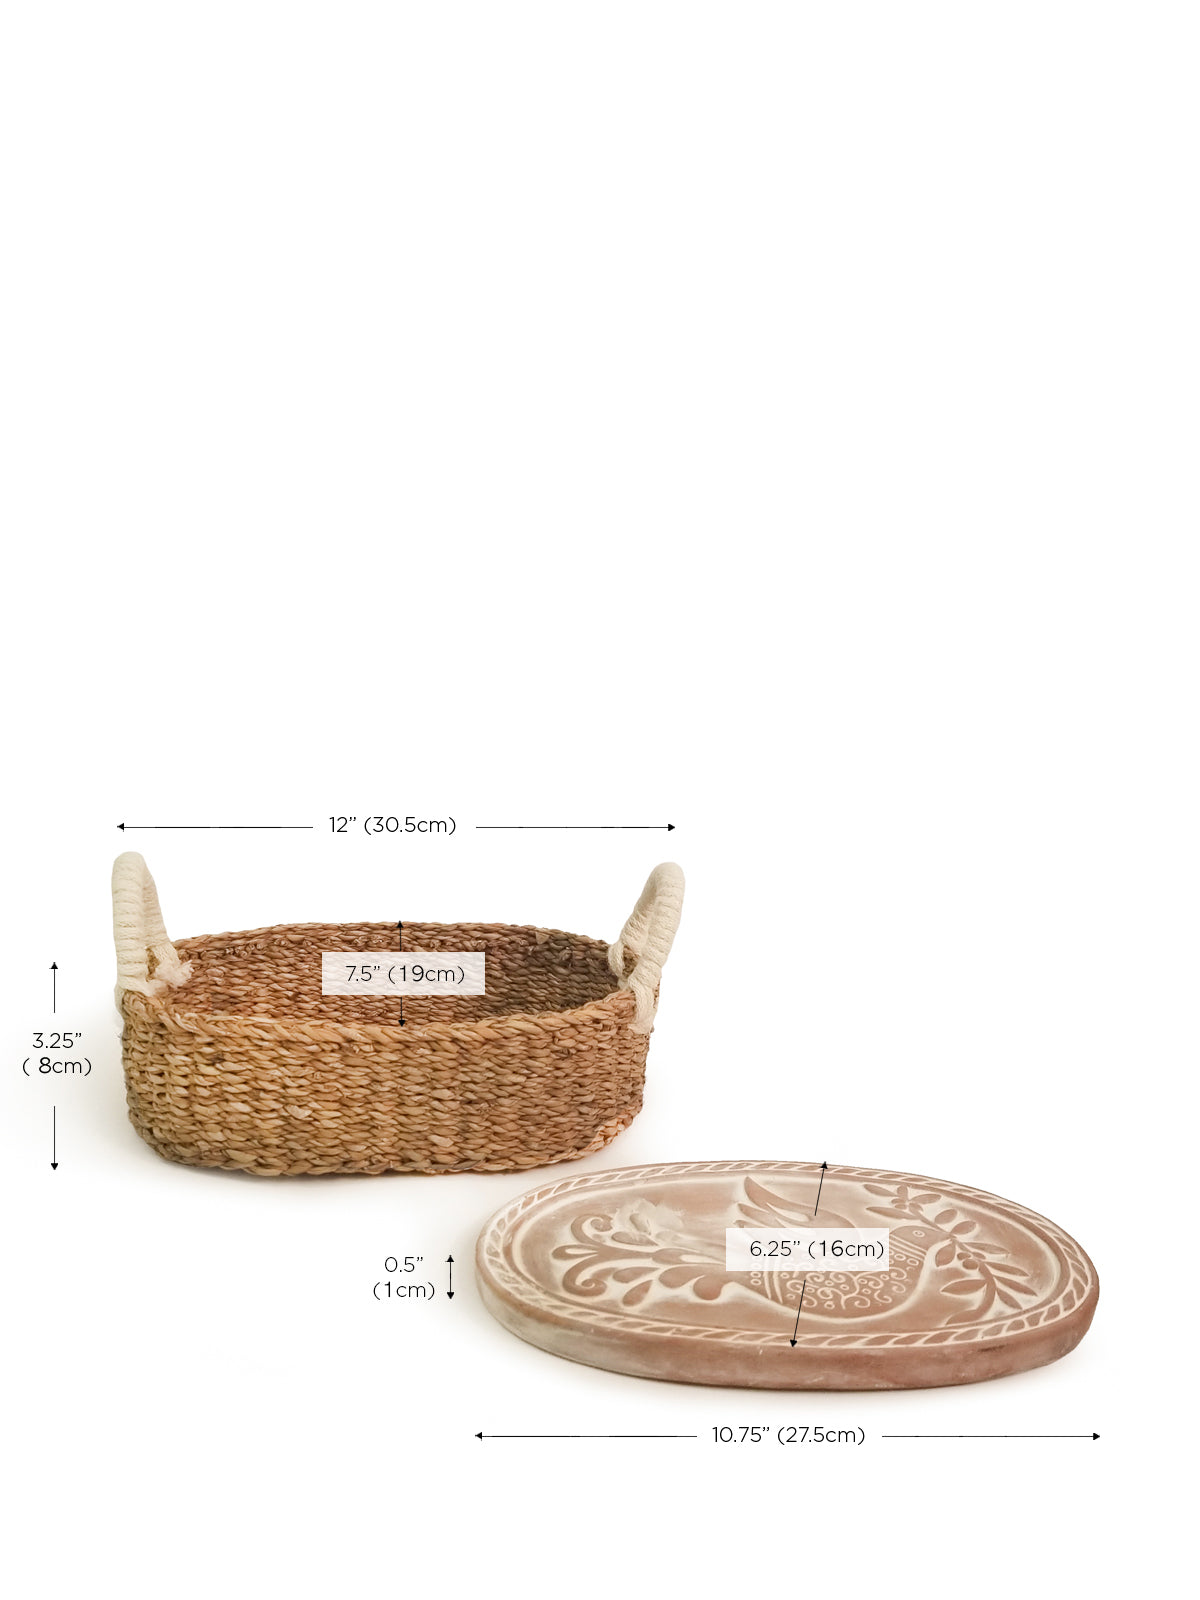  Bread Warmer & Basket - Bird Oval by KORISSA KORISSA Perfumarie